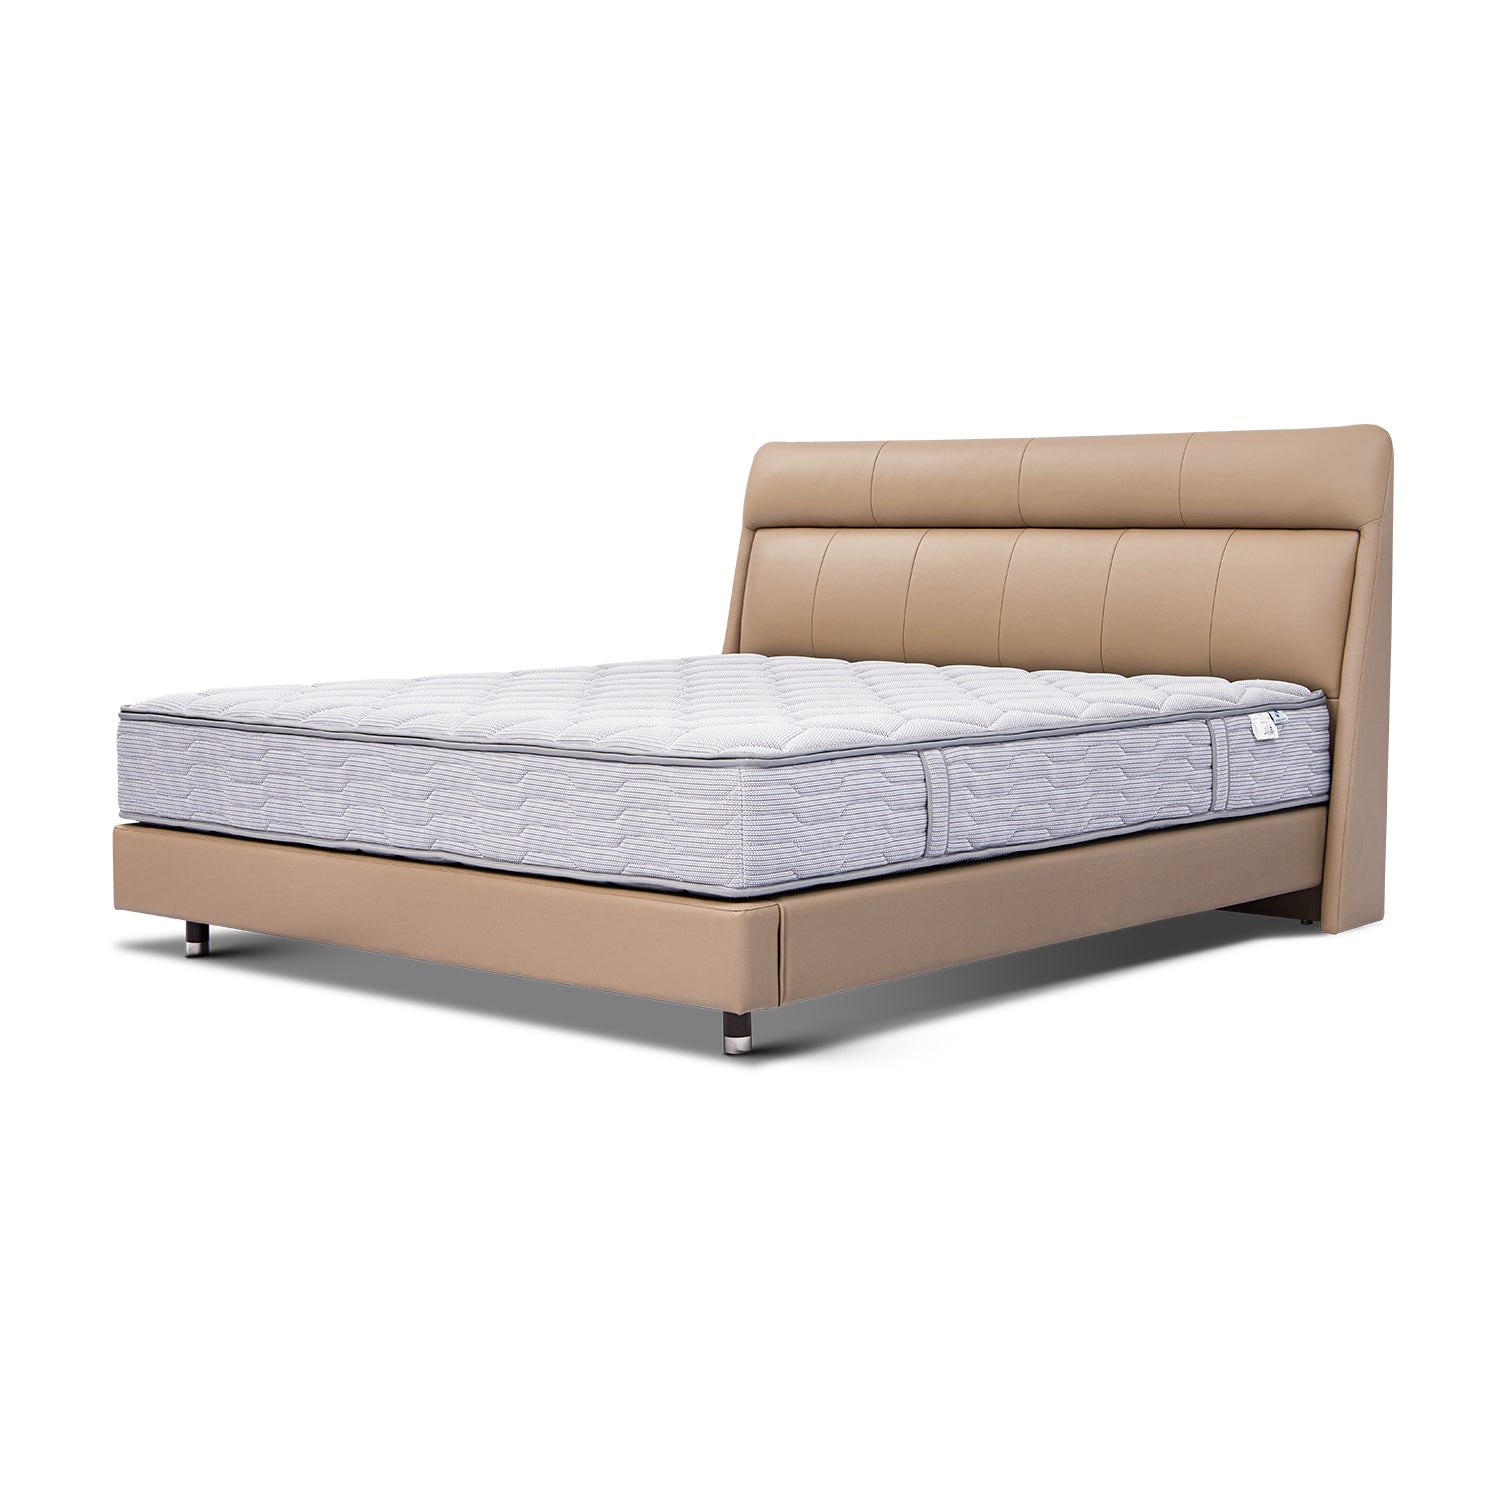 Bed Frame BOC1 - 011 with beige leather upholstered headboard and mattress on platform bed base